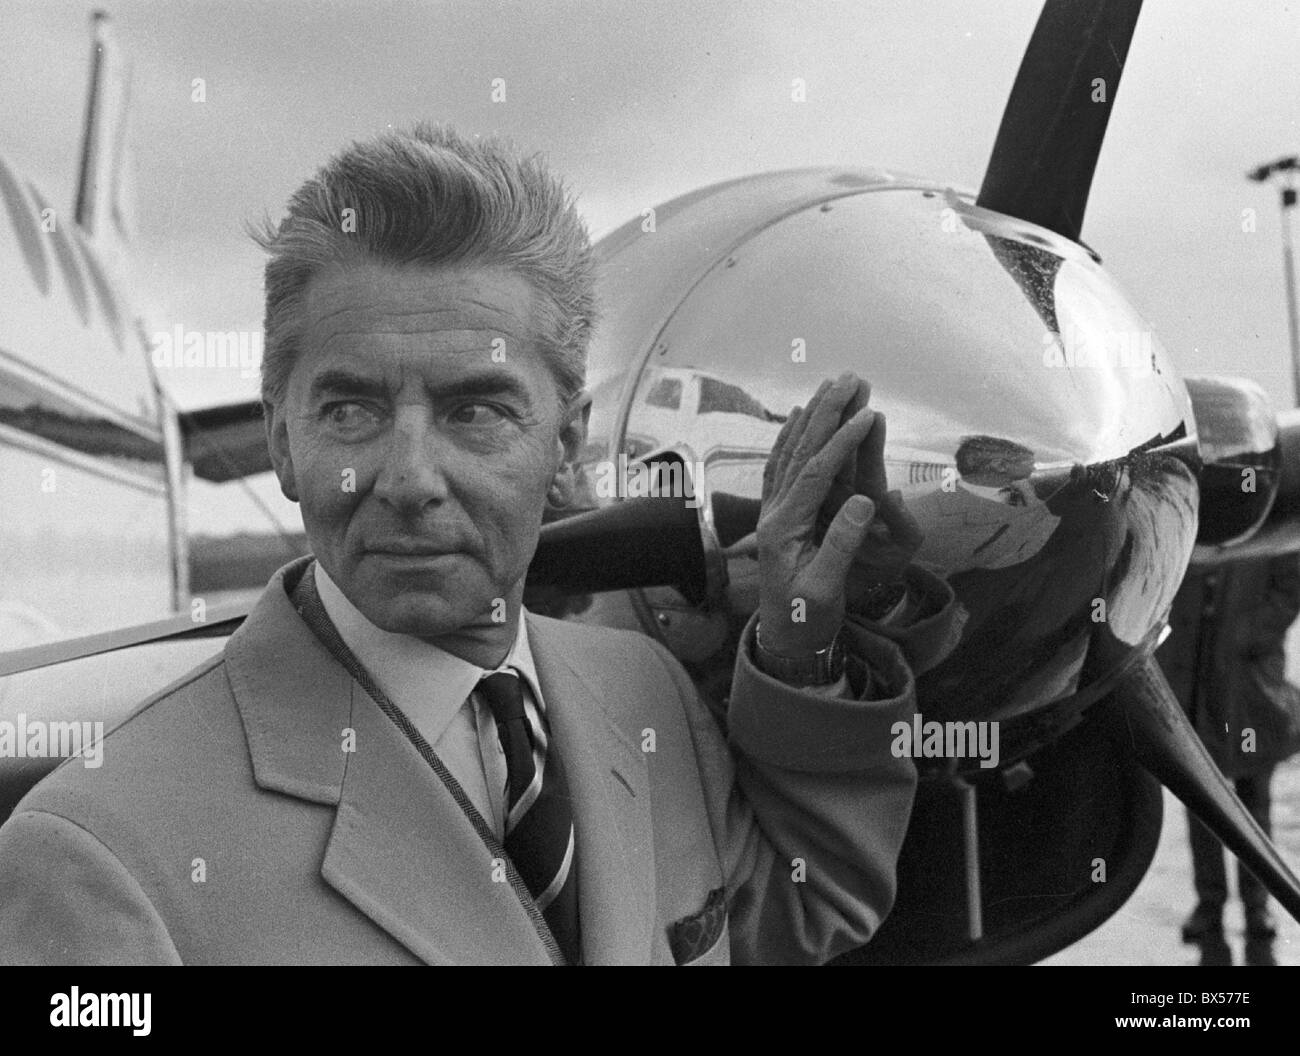 Herbert von Karajan, arrival, aircraft, airplain, Prague Stock Photo